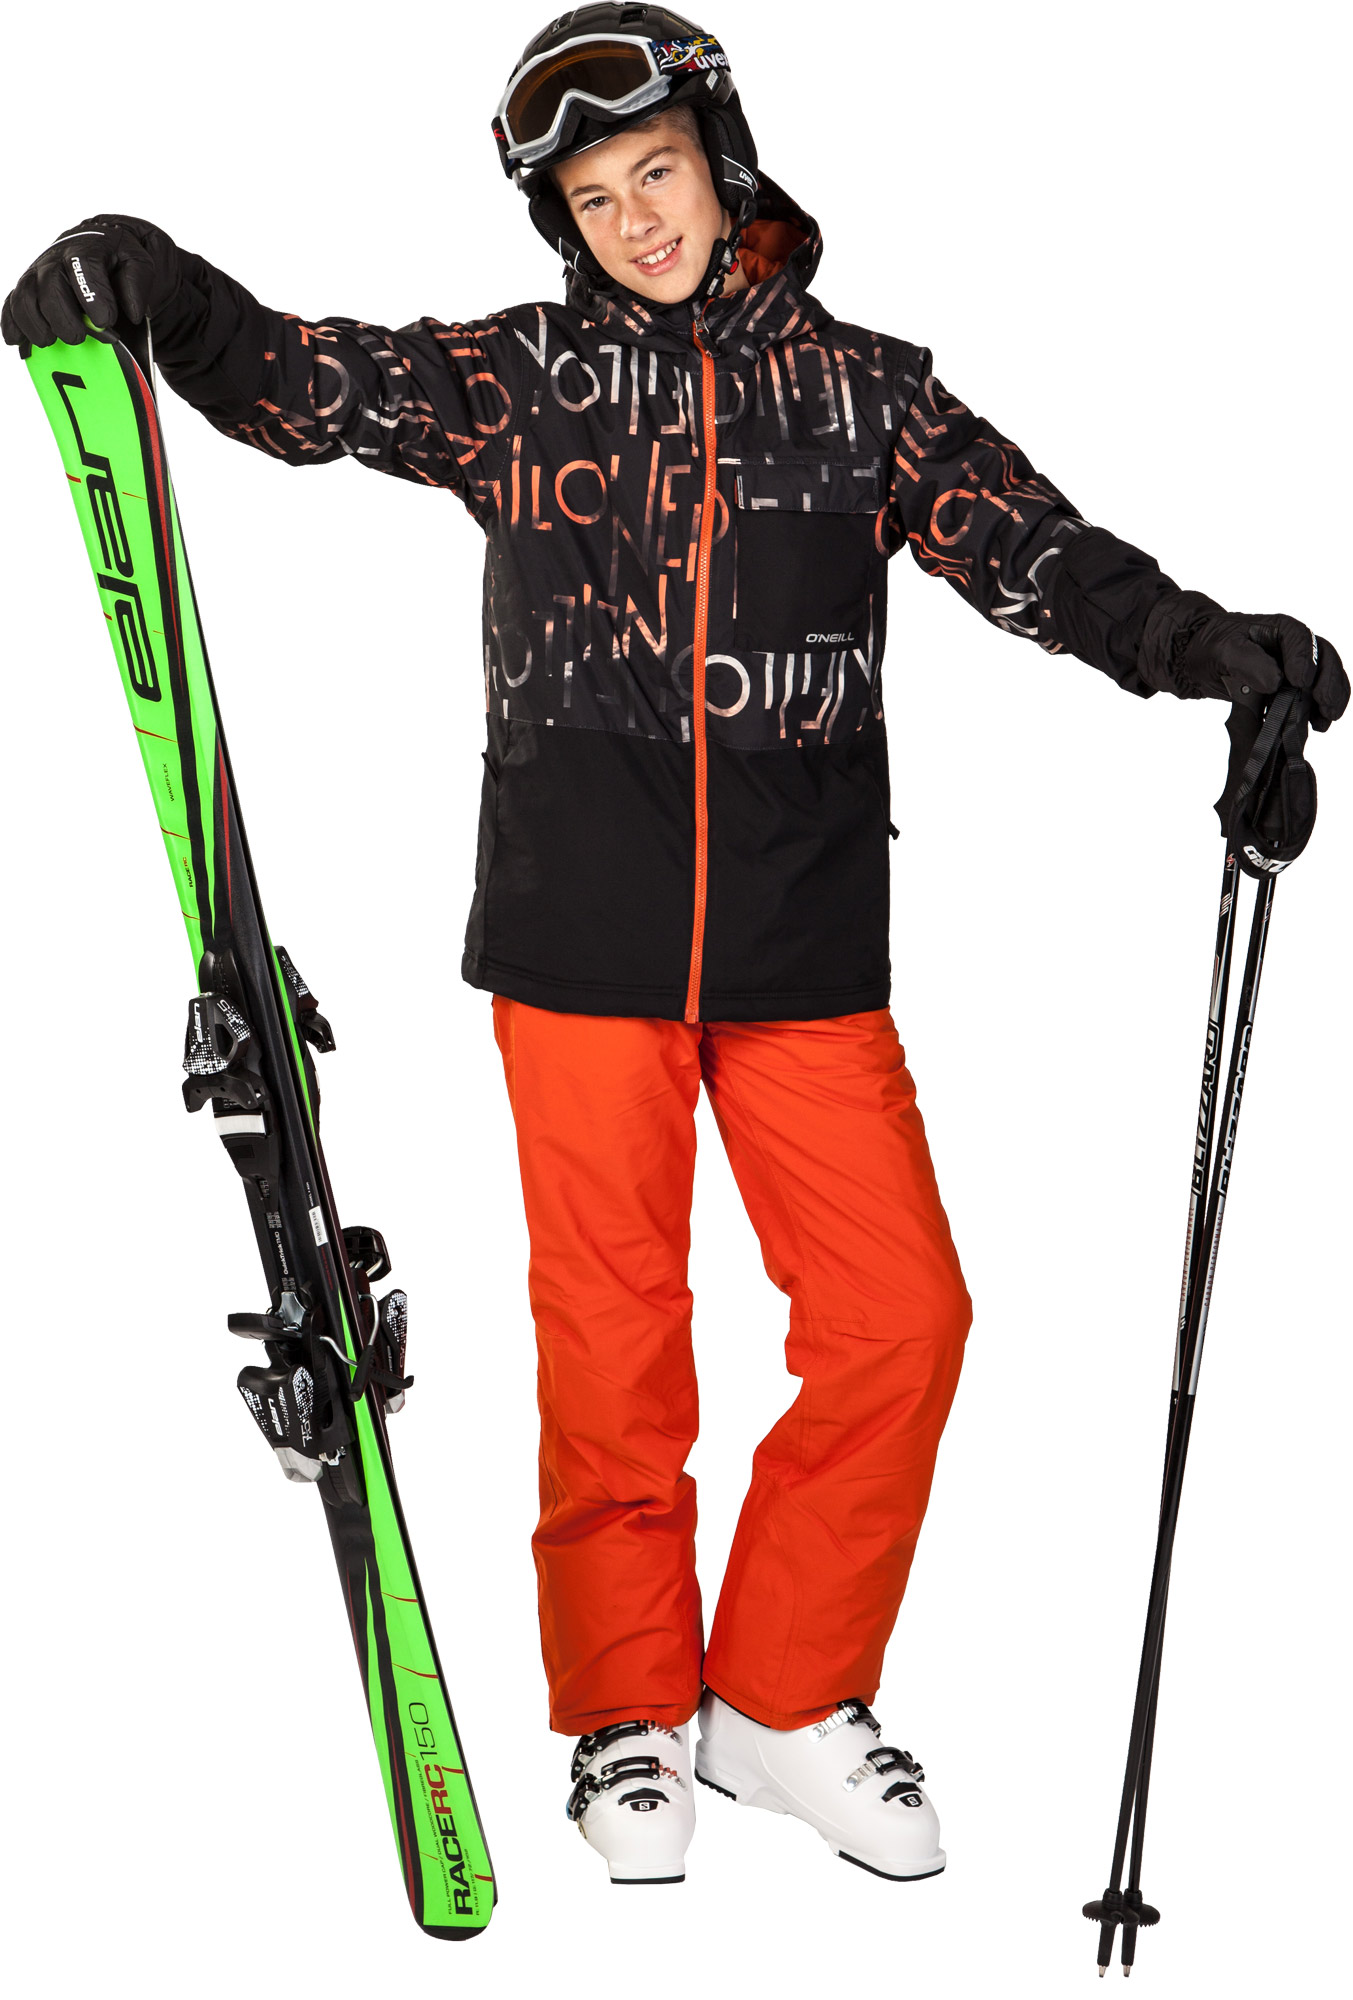 Kids' Downhill Skis